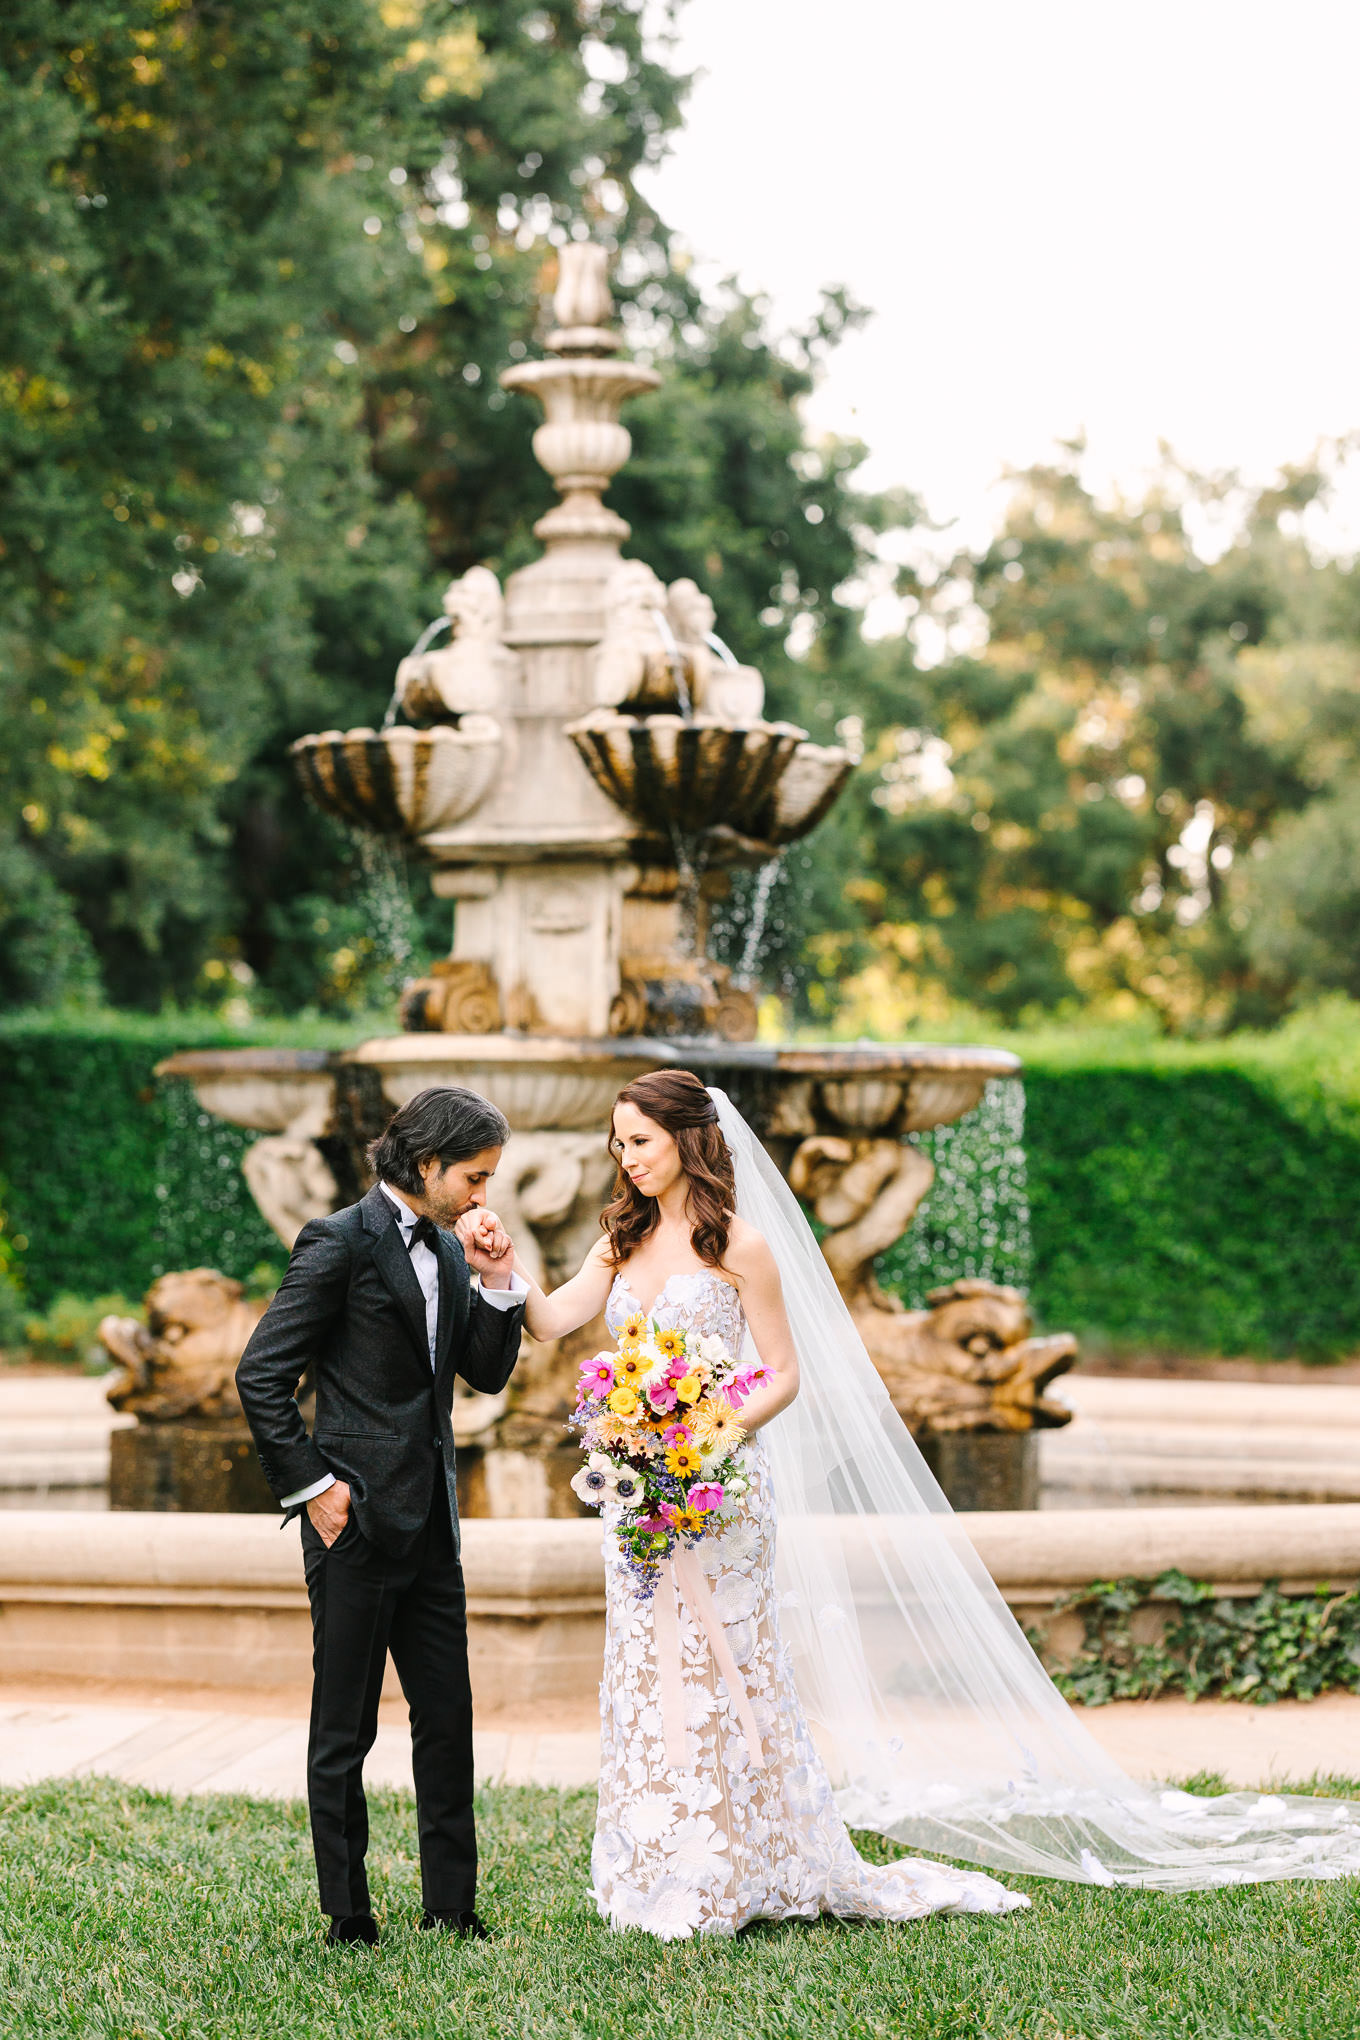 Huntington Gardens Pasadena wedding | Wedding and elopement photography roundup | Los Angeles and Palm Springs photographer | #losangeleswedding #palmspringswedding #elopementphotographer Source: Mary Costa Photography | Los Angeles